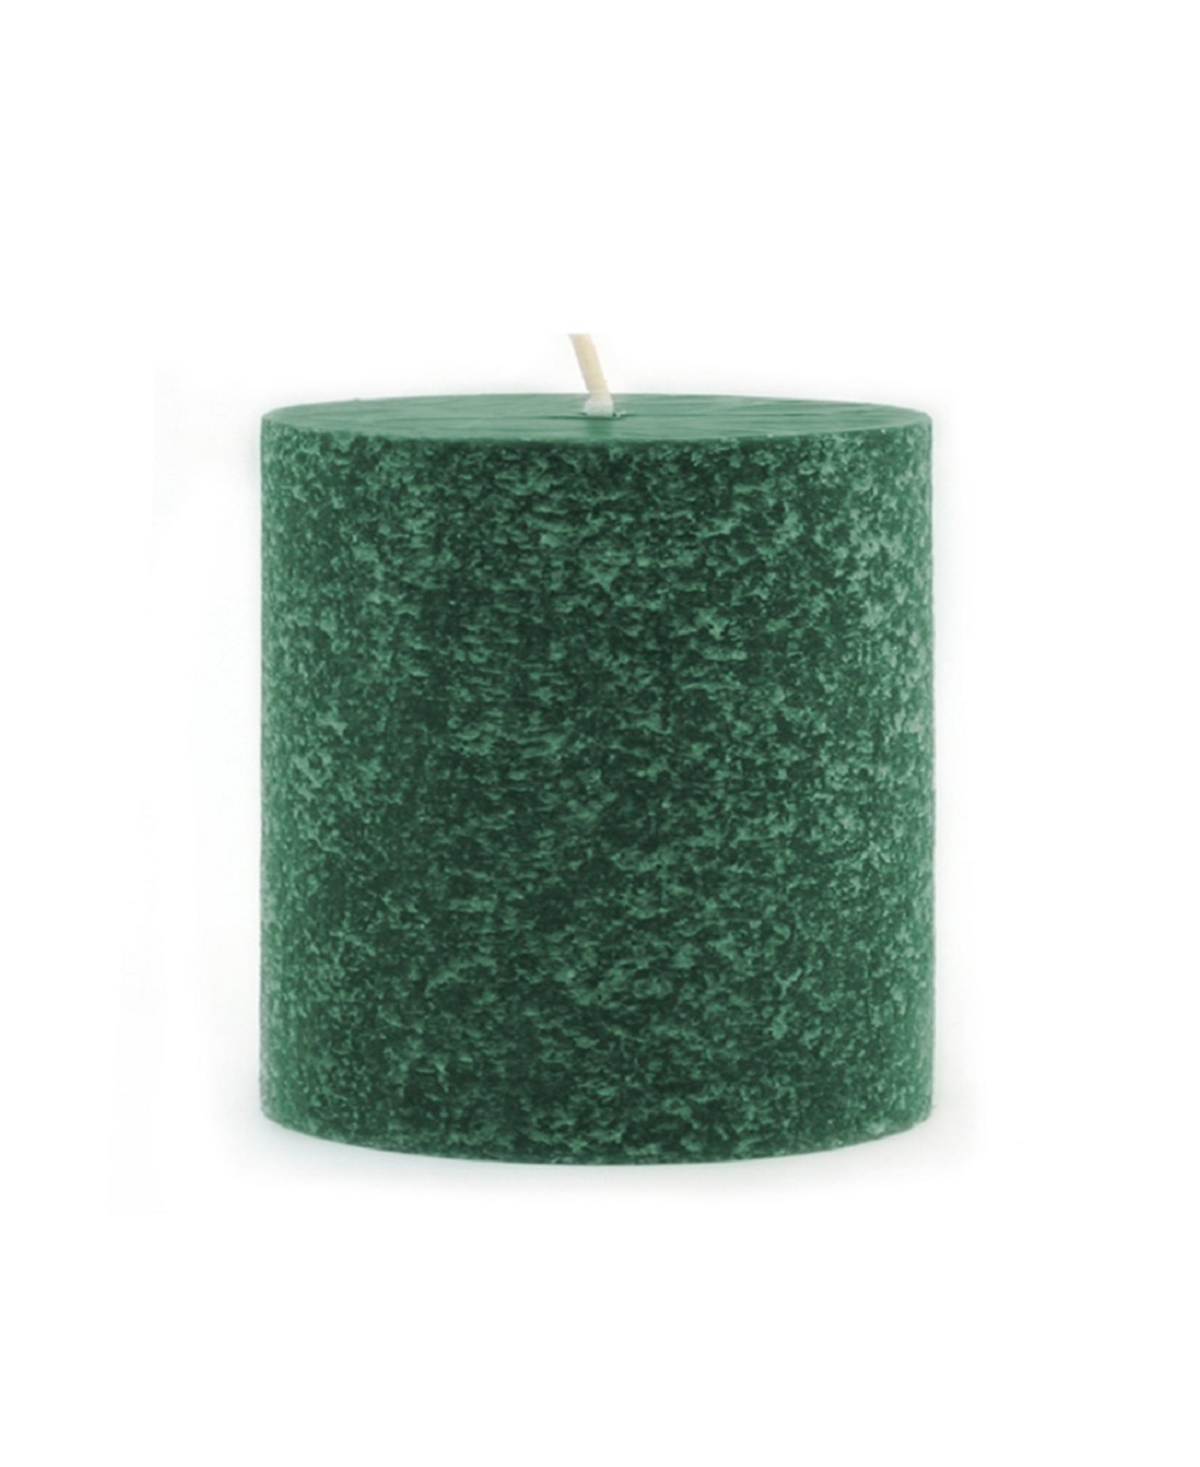 Timberline Pillar Candle, 3" x 3" - Portobello